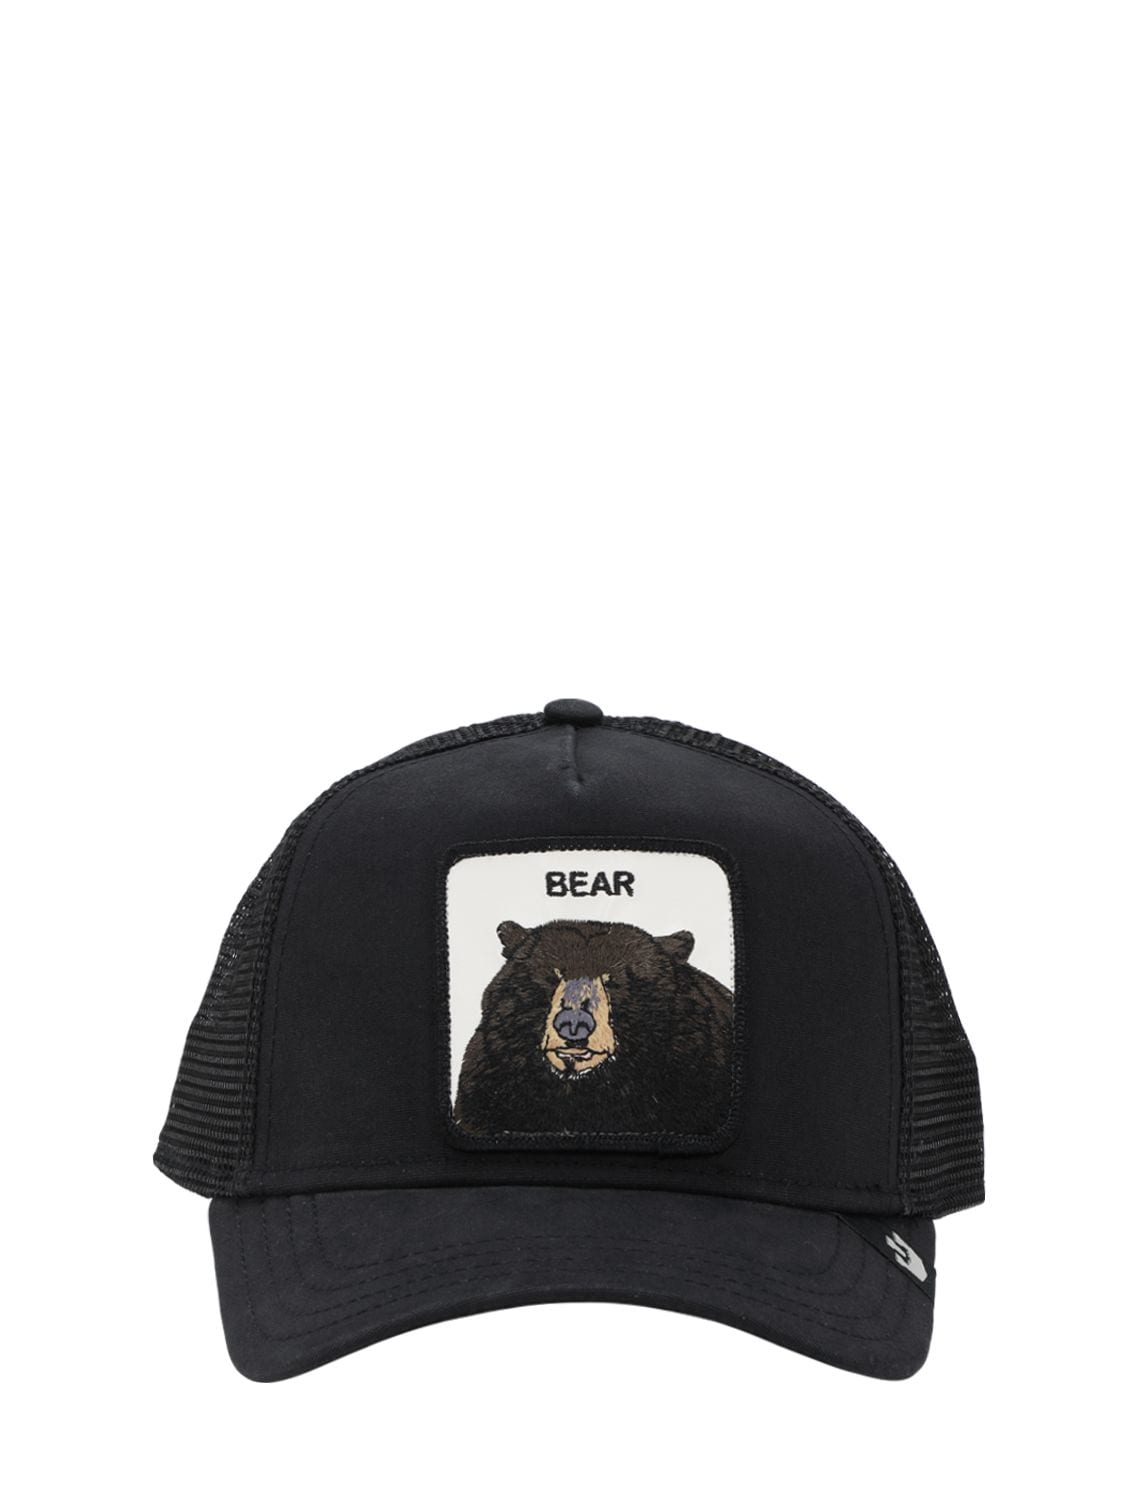 Goorin Bros Black Bear Trucker Hat W/ Patch